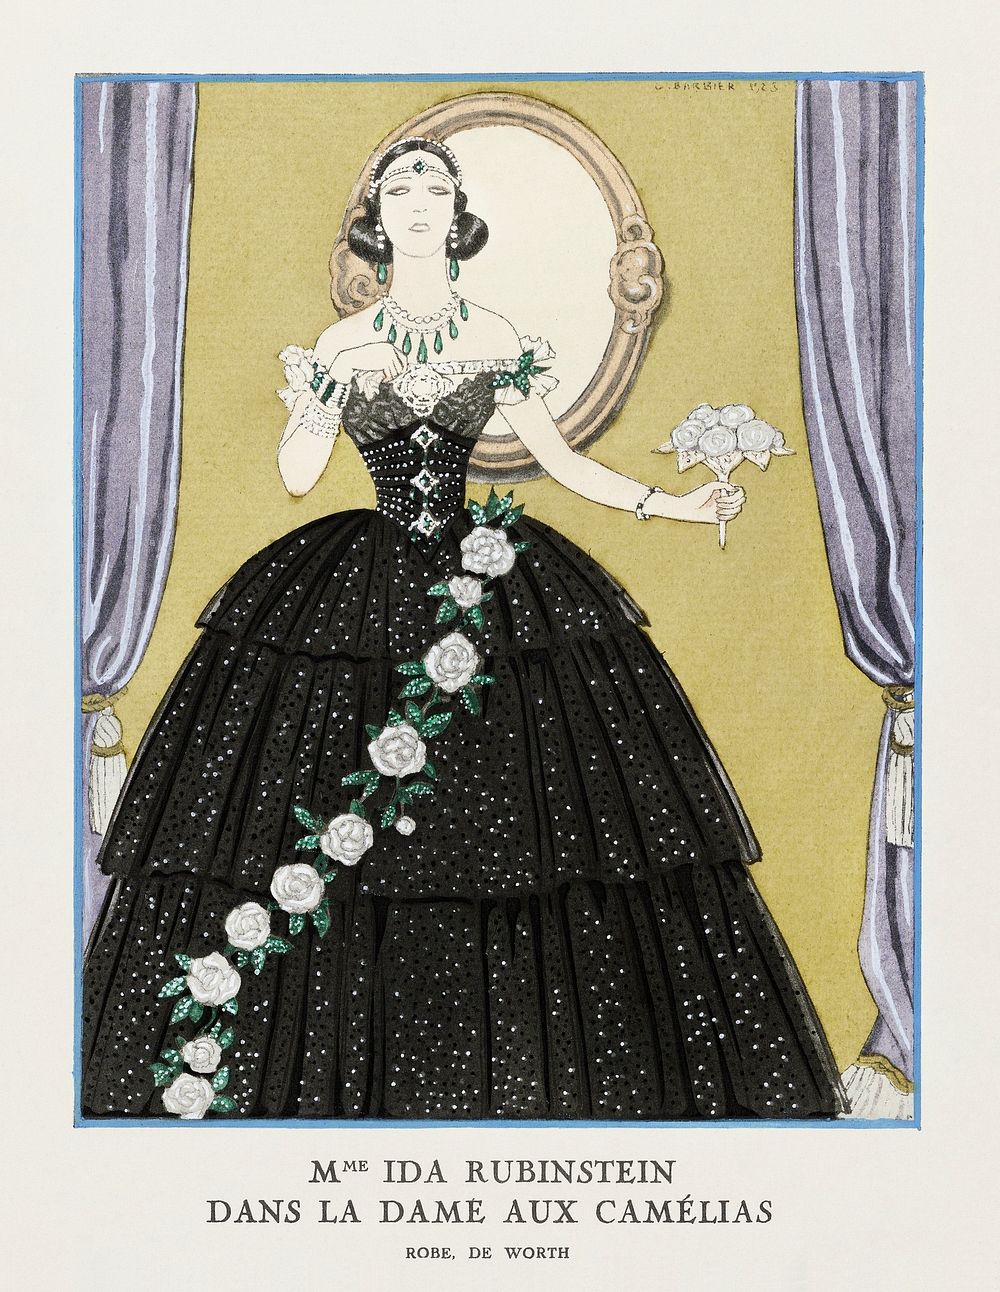 Mme Ida Rubinstein dans "La Dame aux Cam&eacute;lias" (1923) fashion illustration in high resolution by George Barbier.…